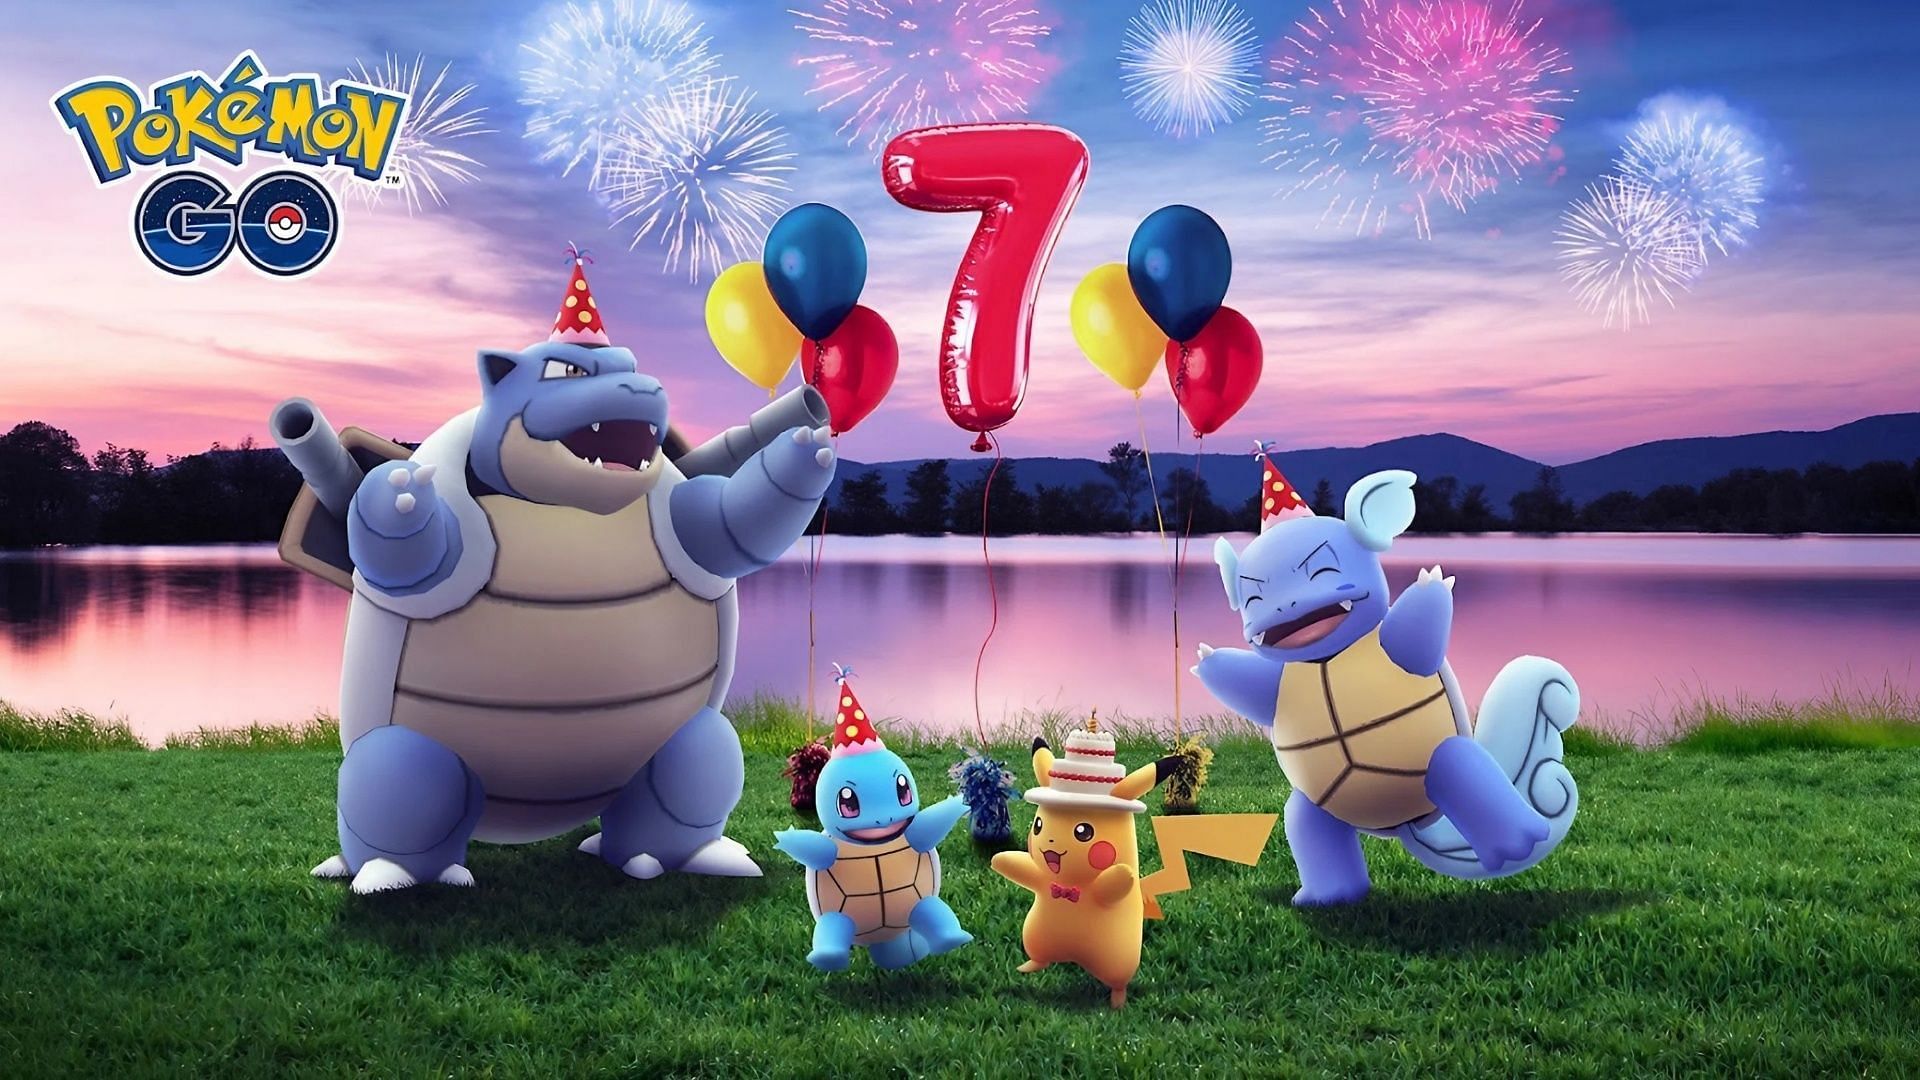 The 7th Anniversary Party event announced (Image via Pokemon GO)